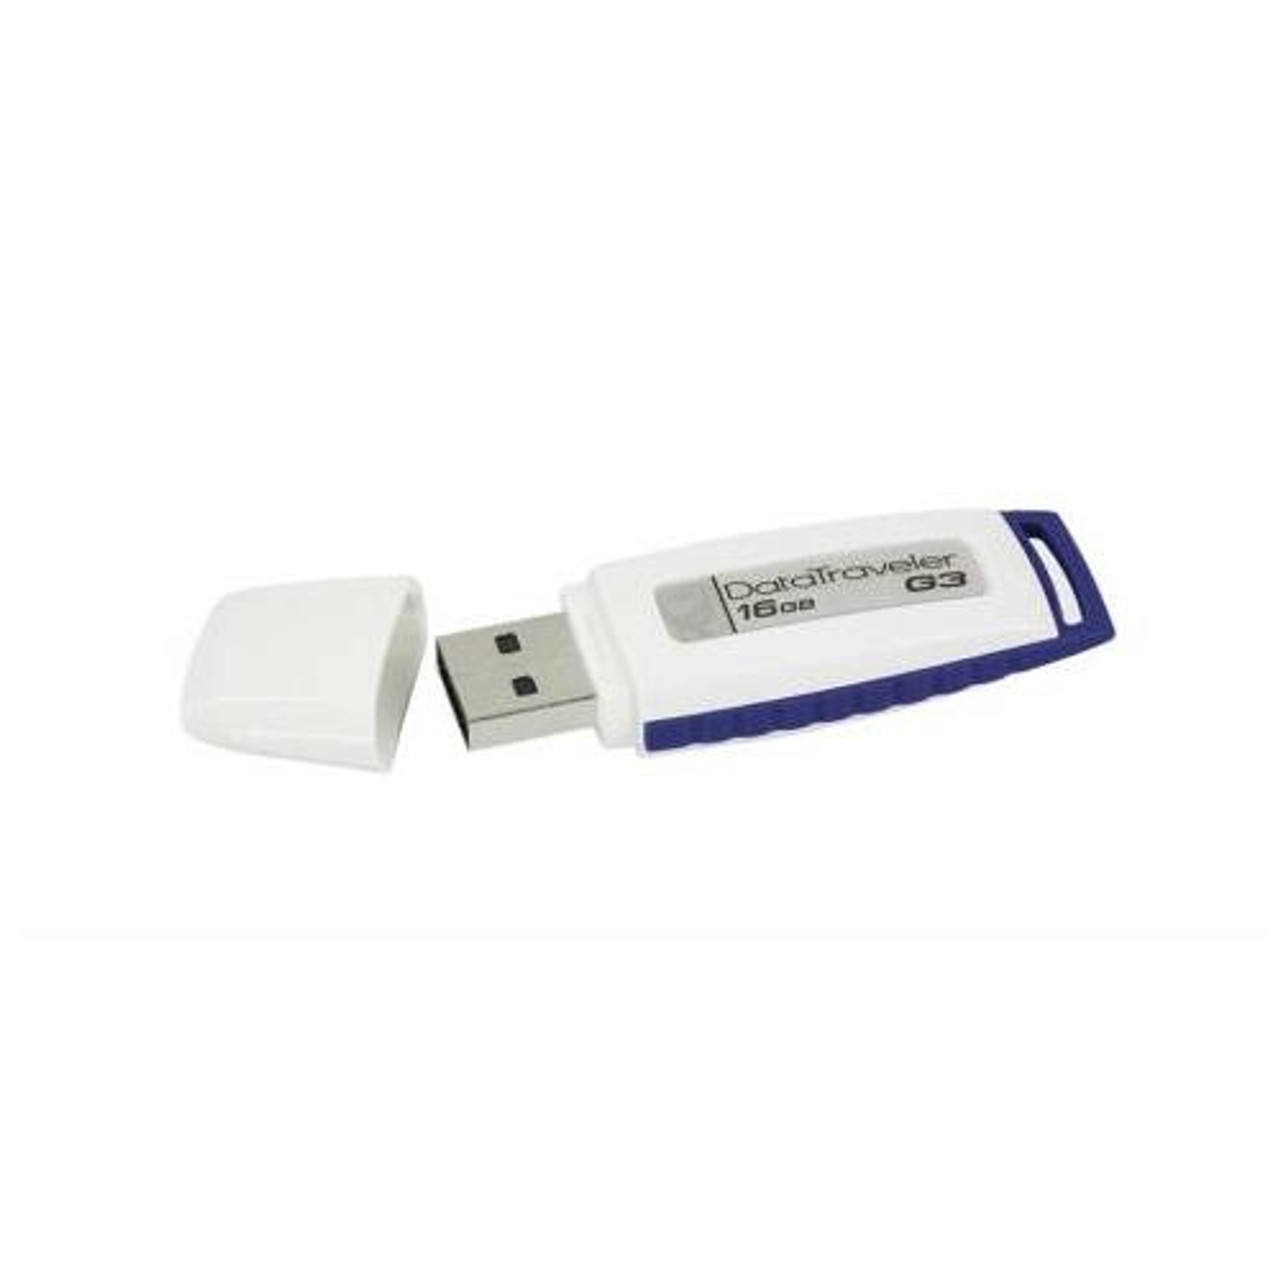 Plaske neutral spiralformet DTIG3/16GBZ-B2 Kingston DataTraveler G3 16GB USB 2.0 Flash Drive